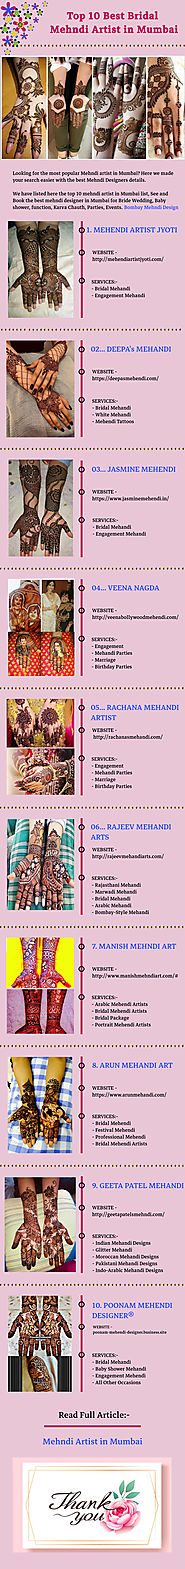 Top 10 Best Bridal Mehndi Artist in Mumbai | Infographic